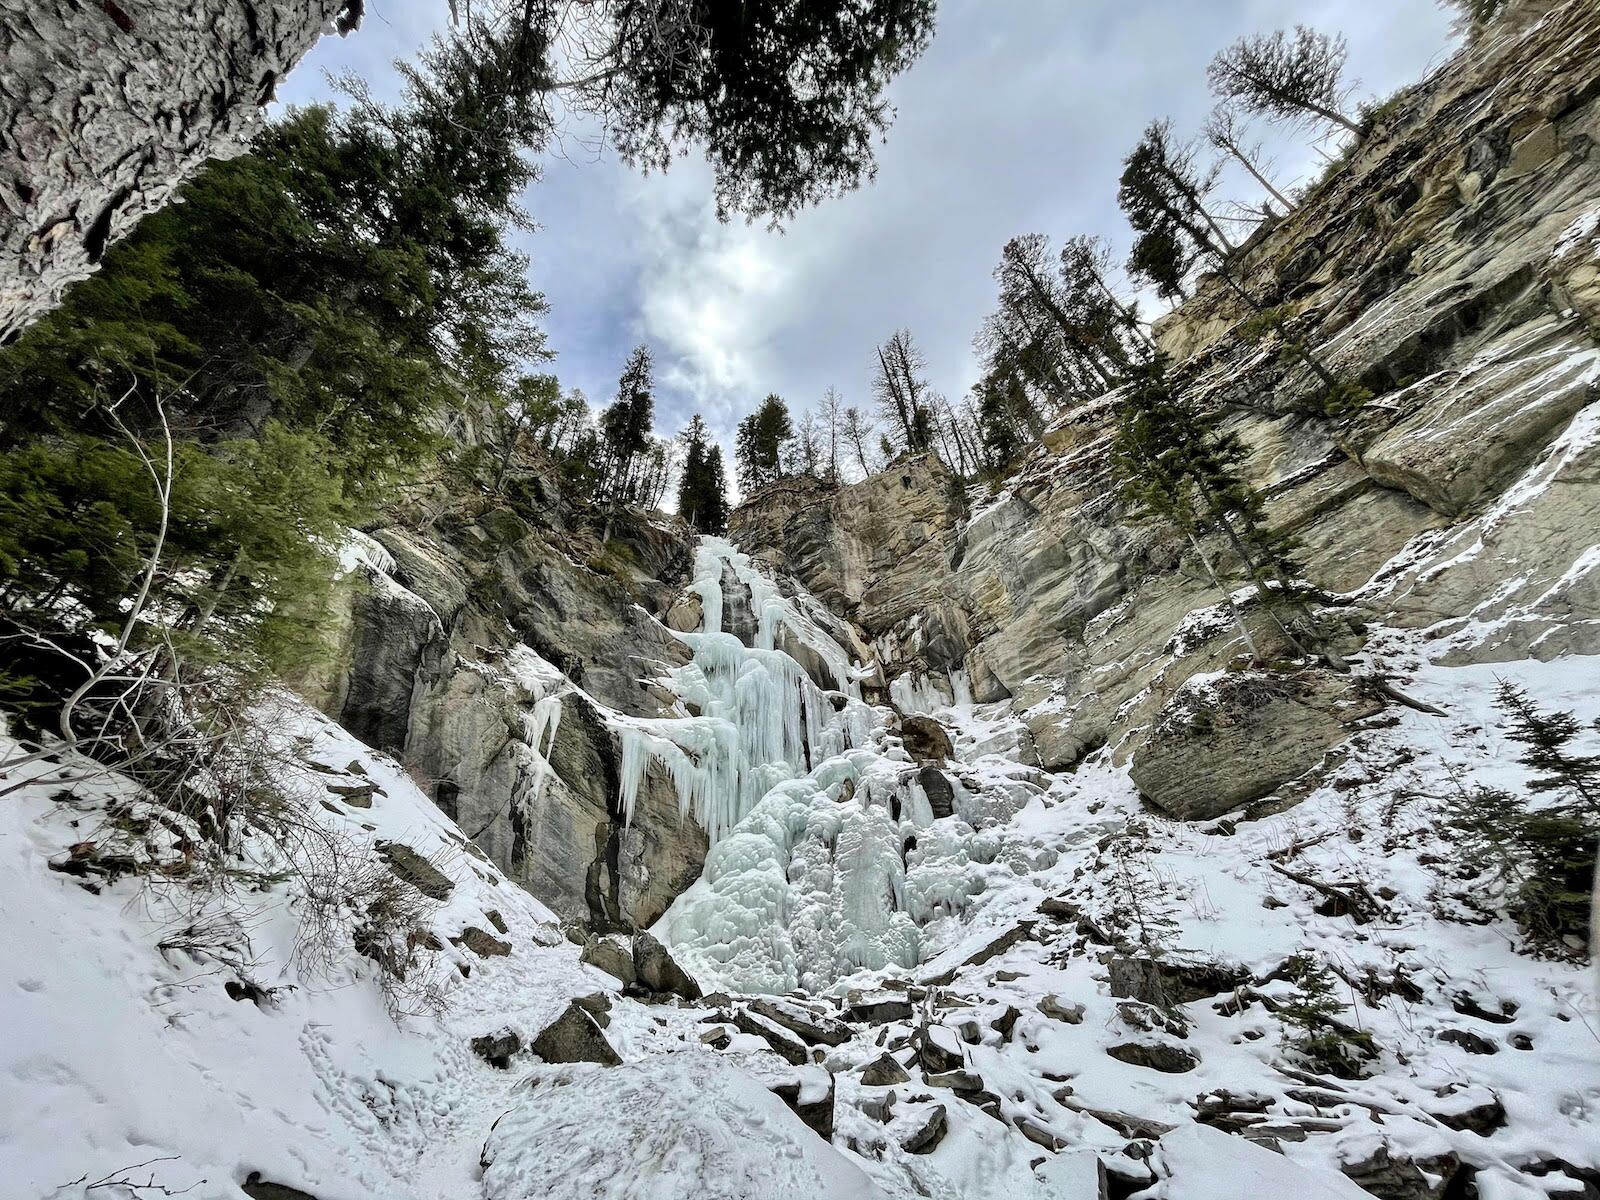 Cataract Falls, one of the best frozen waterfalls in Montana